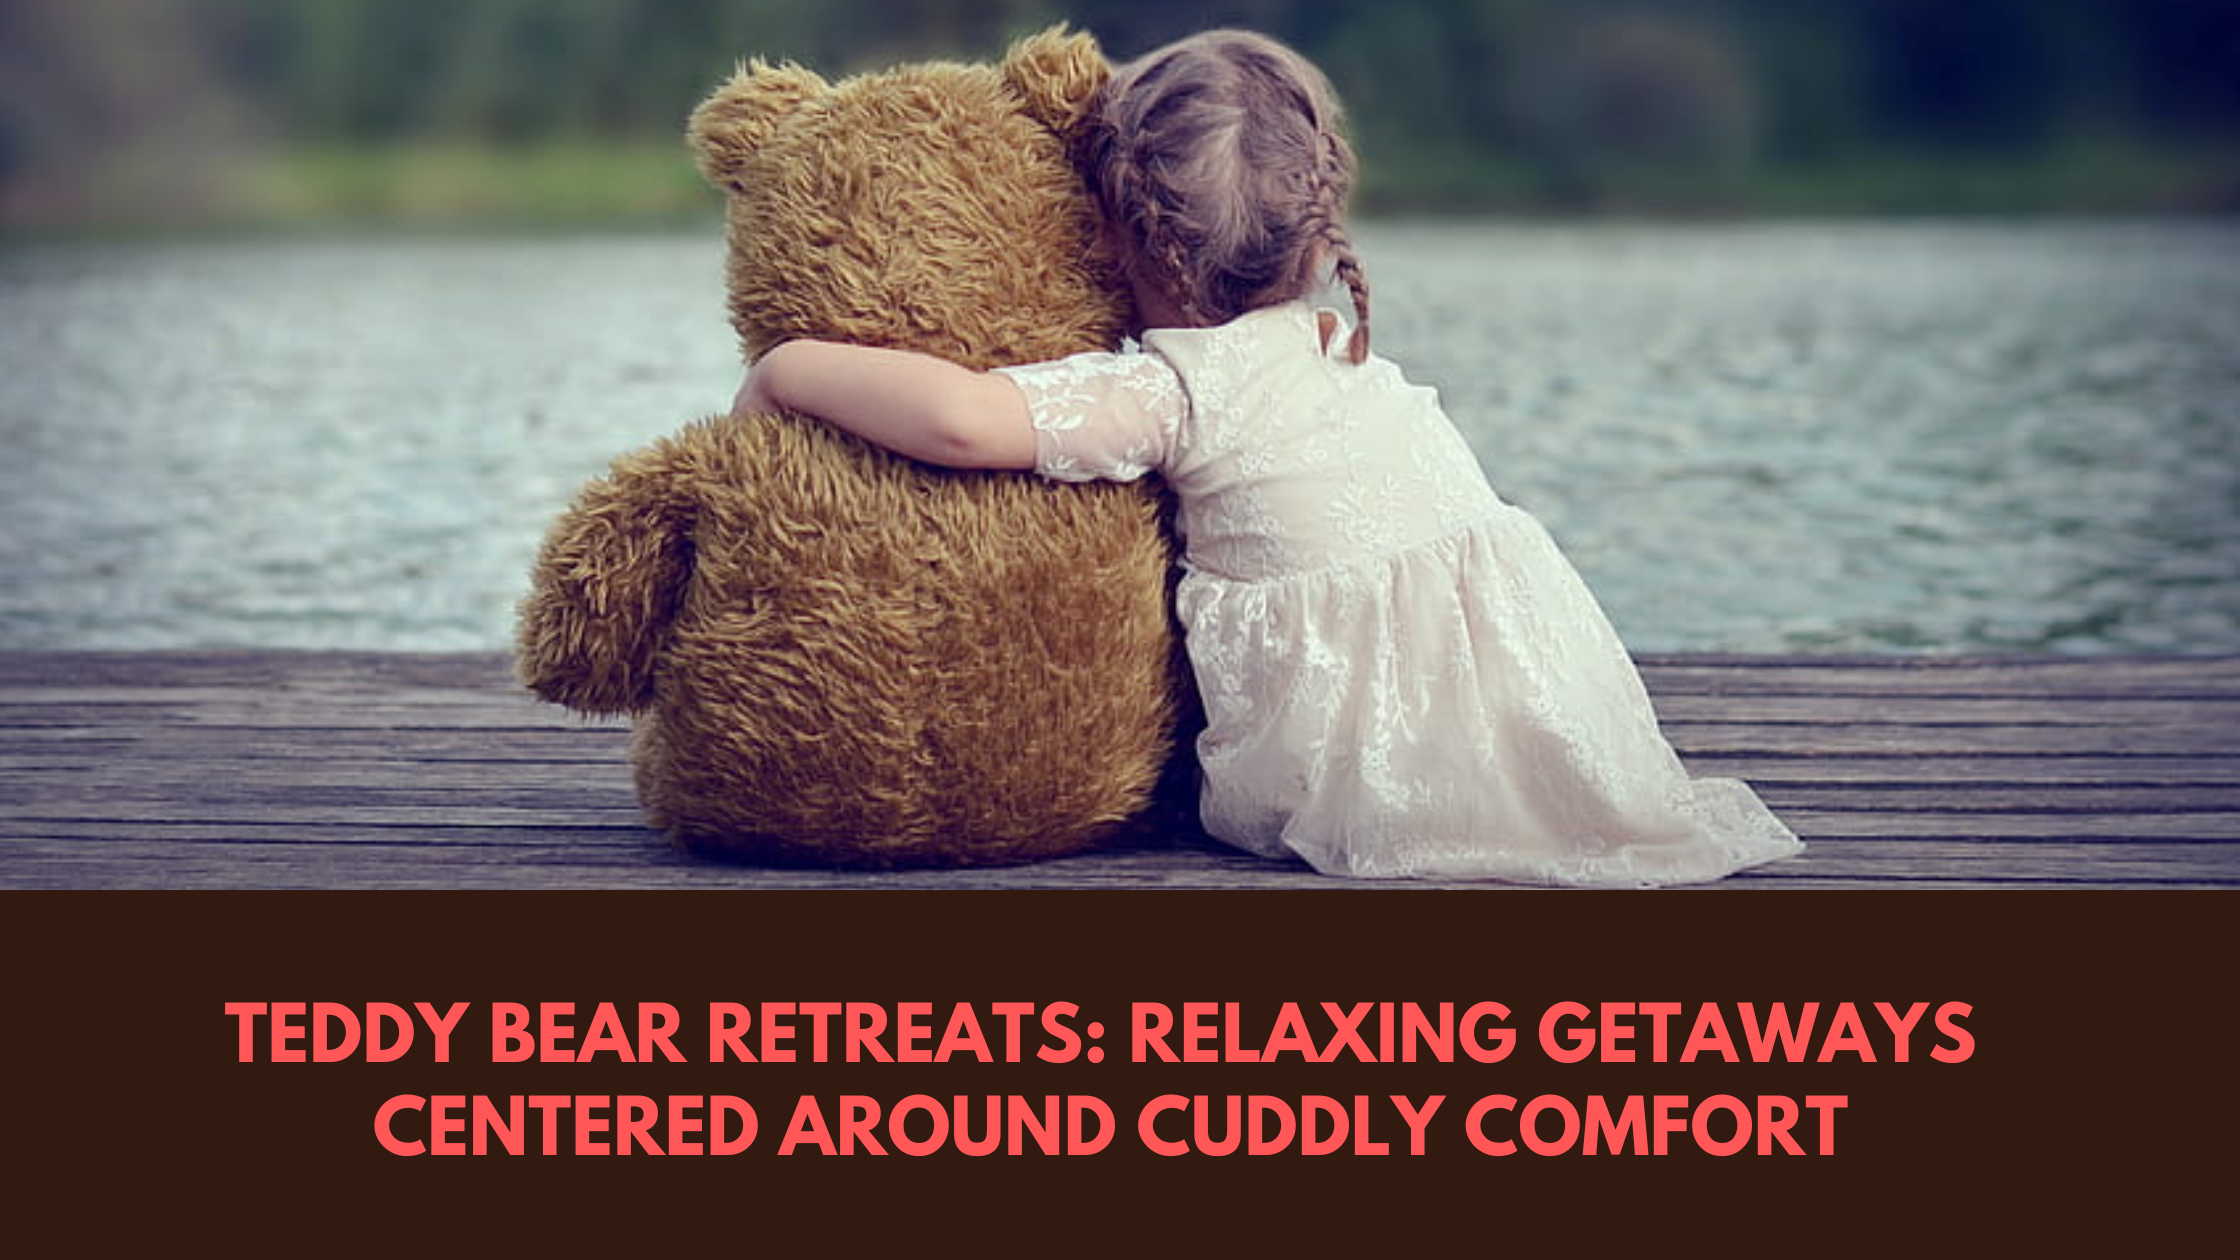 Teddy Bear Retreats: Relaxing Getaways Centered Around Cuddly Comfort